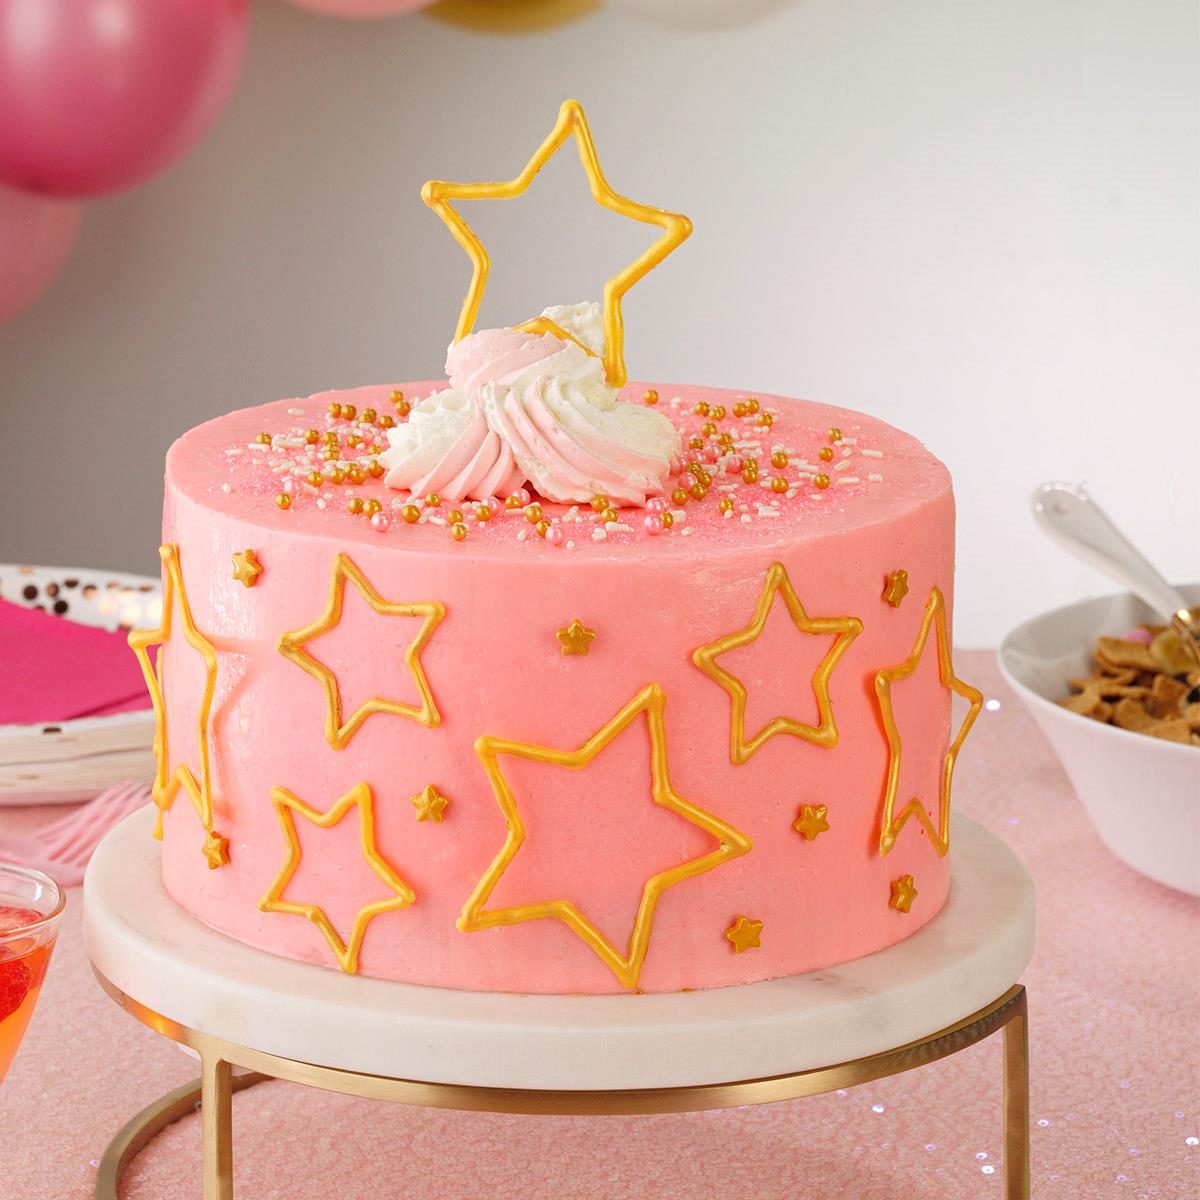 Aggregate 233+ birthday cake best